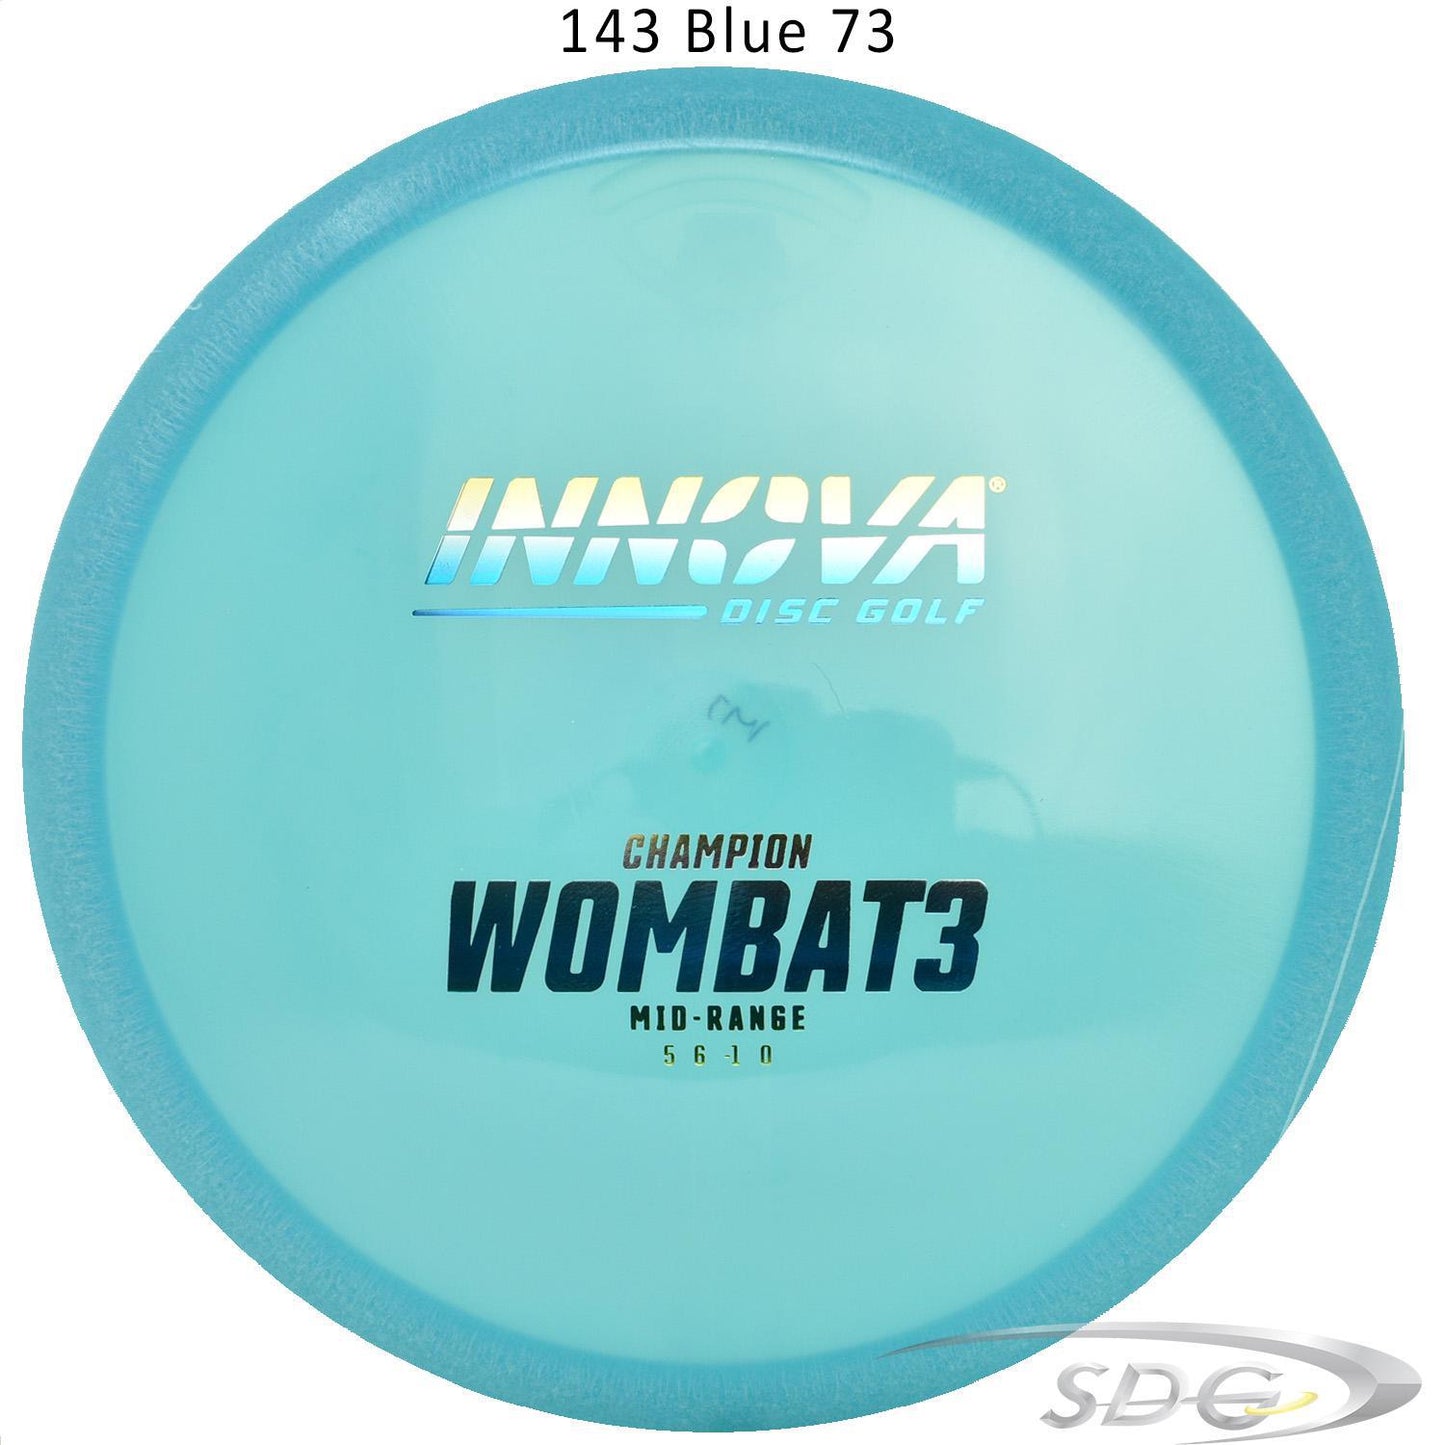 innova-champion-wombat3-disc-golf-mid-range 143 Blue 73 